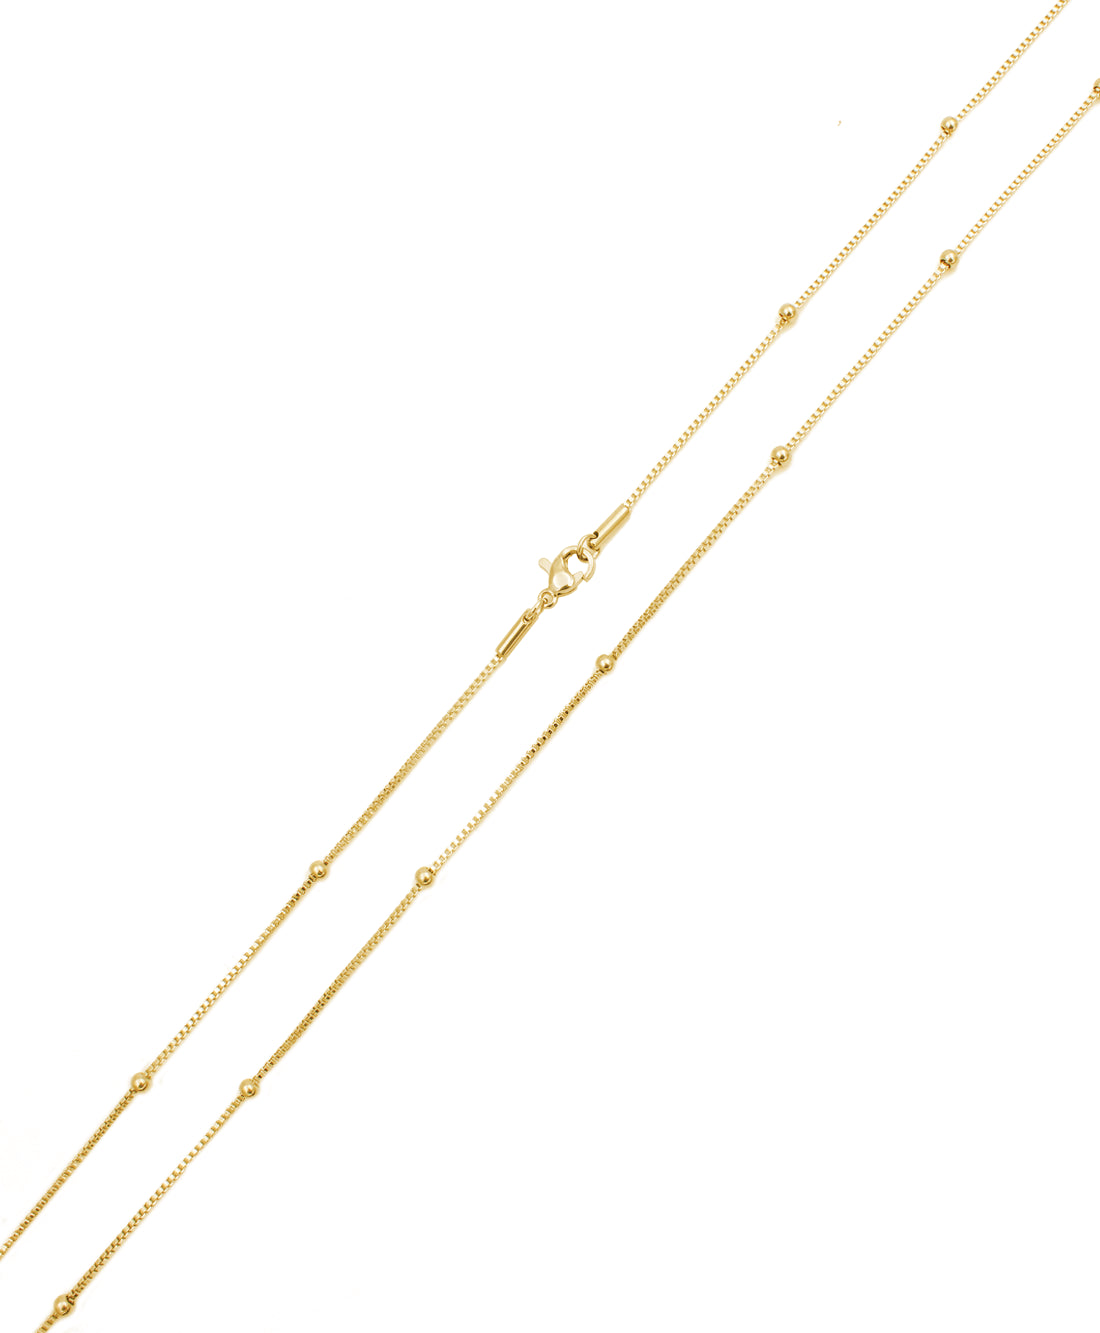 Long necklace / Necklace - Gold - Pregnancy bola 110cm